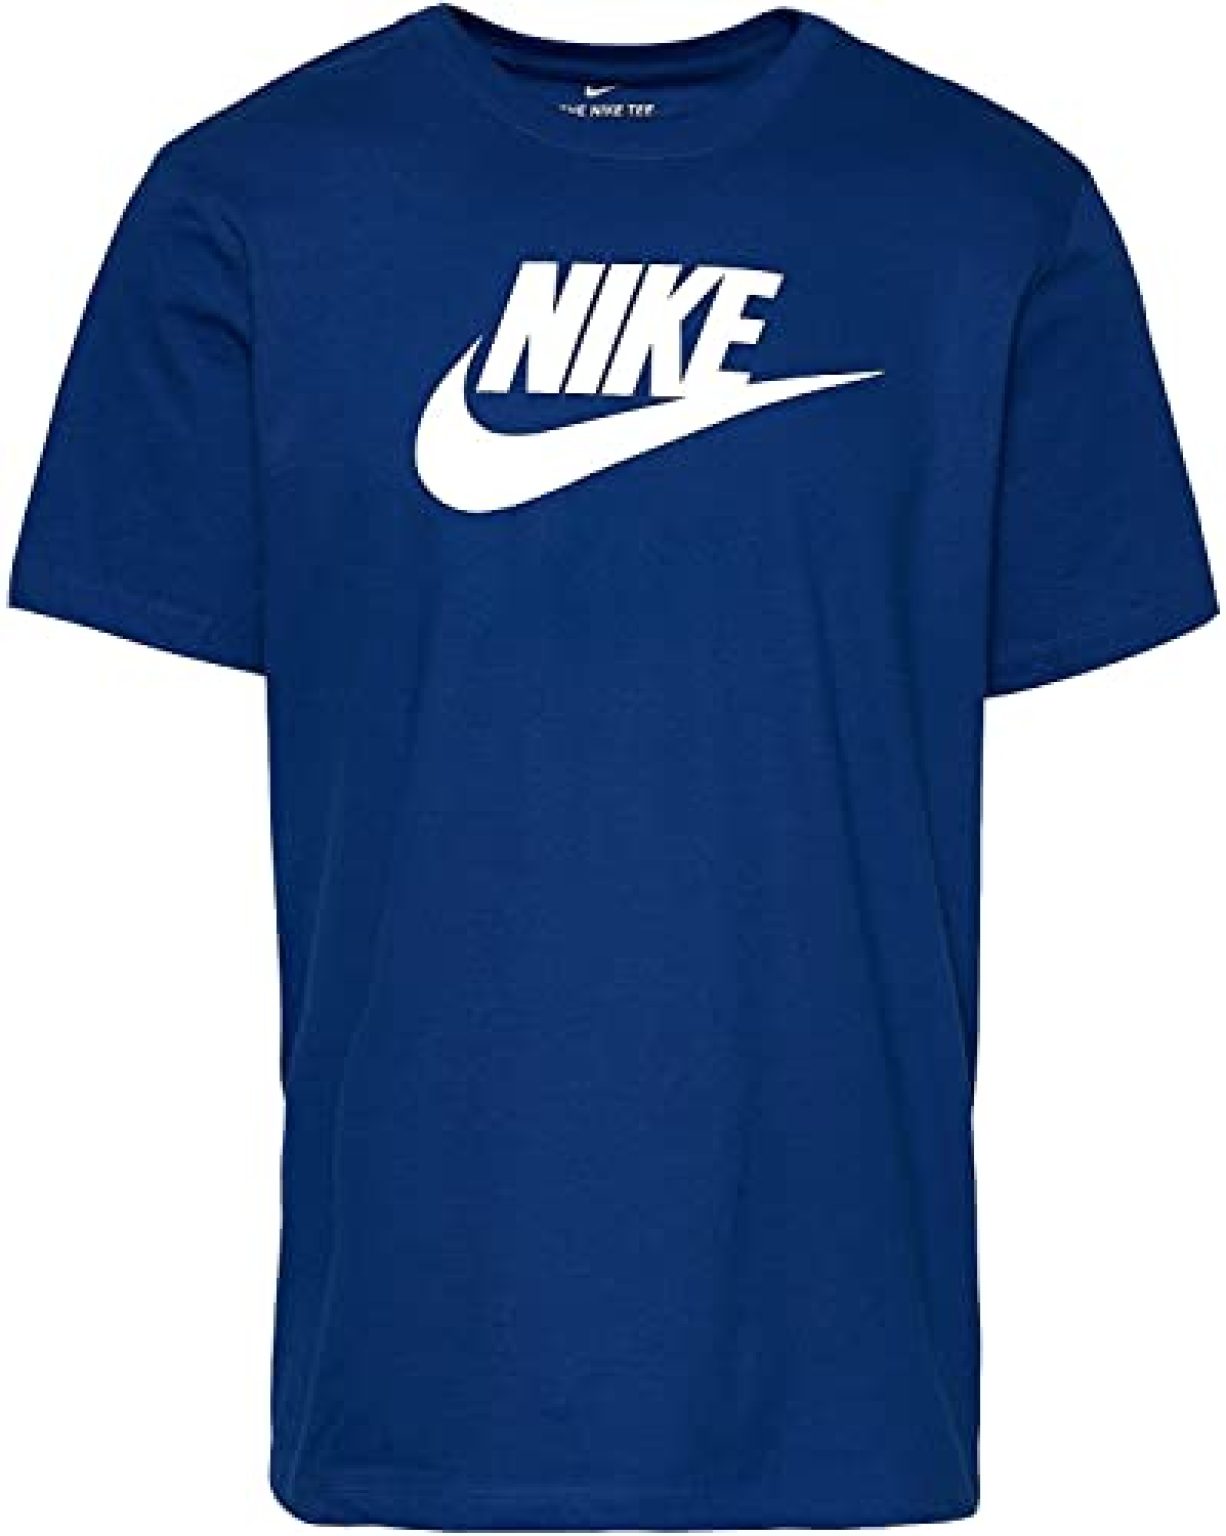 Nike Men's Sportswear Short Sleeve Shirt